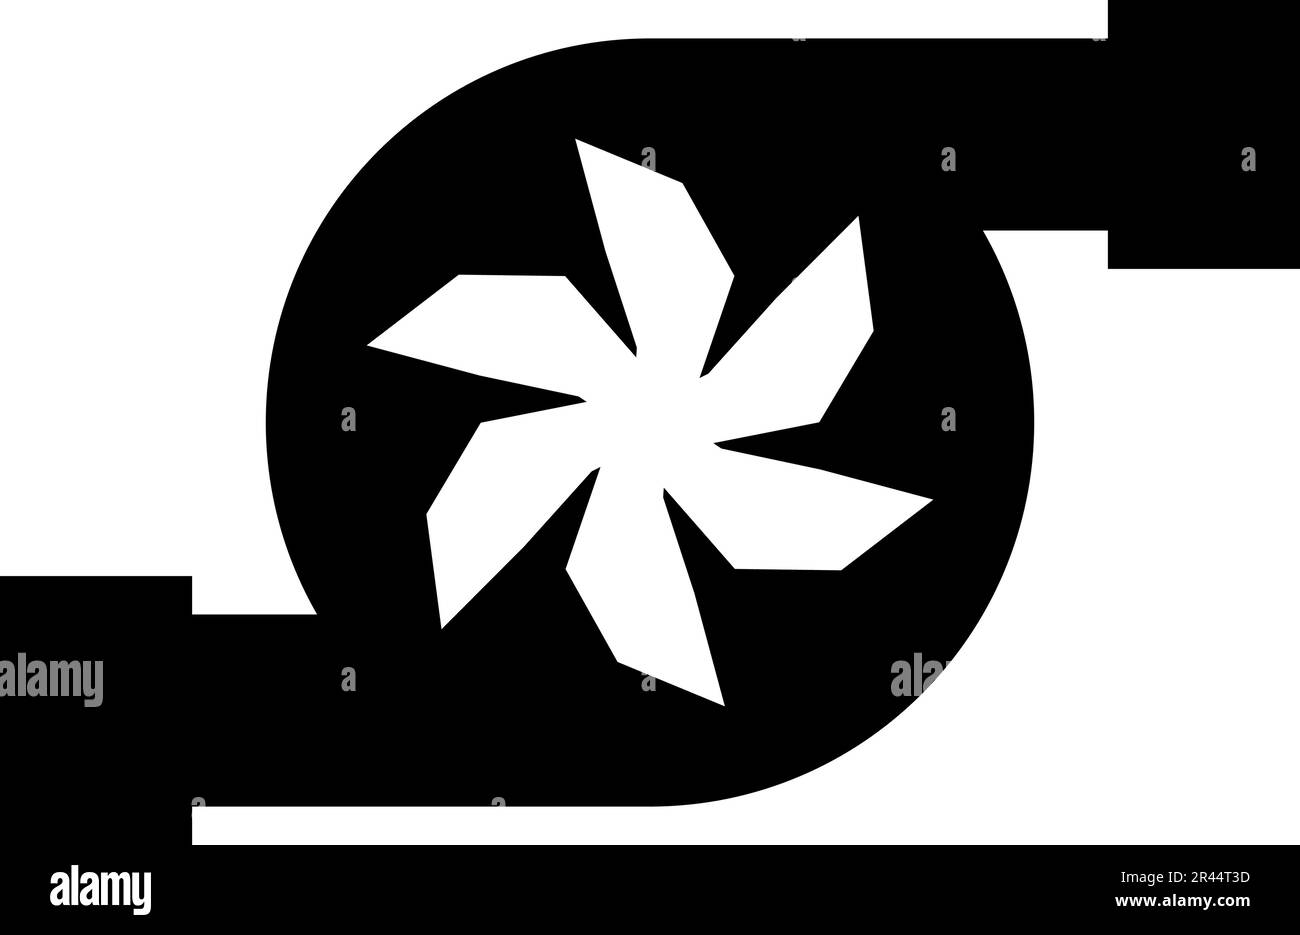 Turbocharger icon Black and White Stock Photos & Images - Alamy